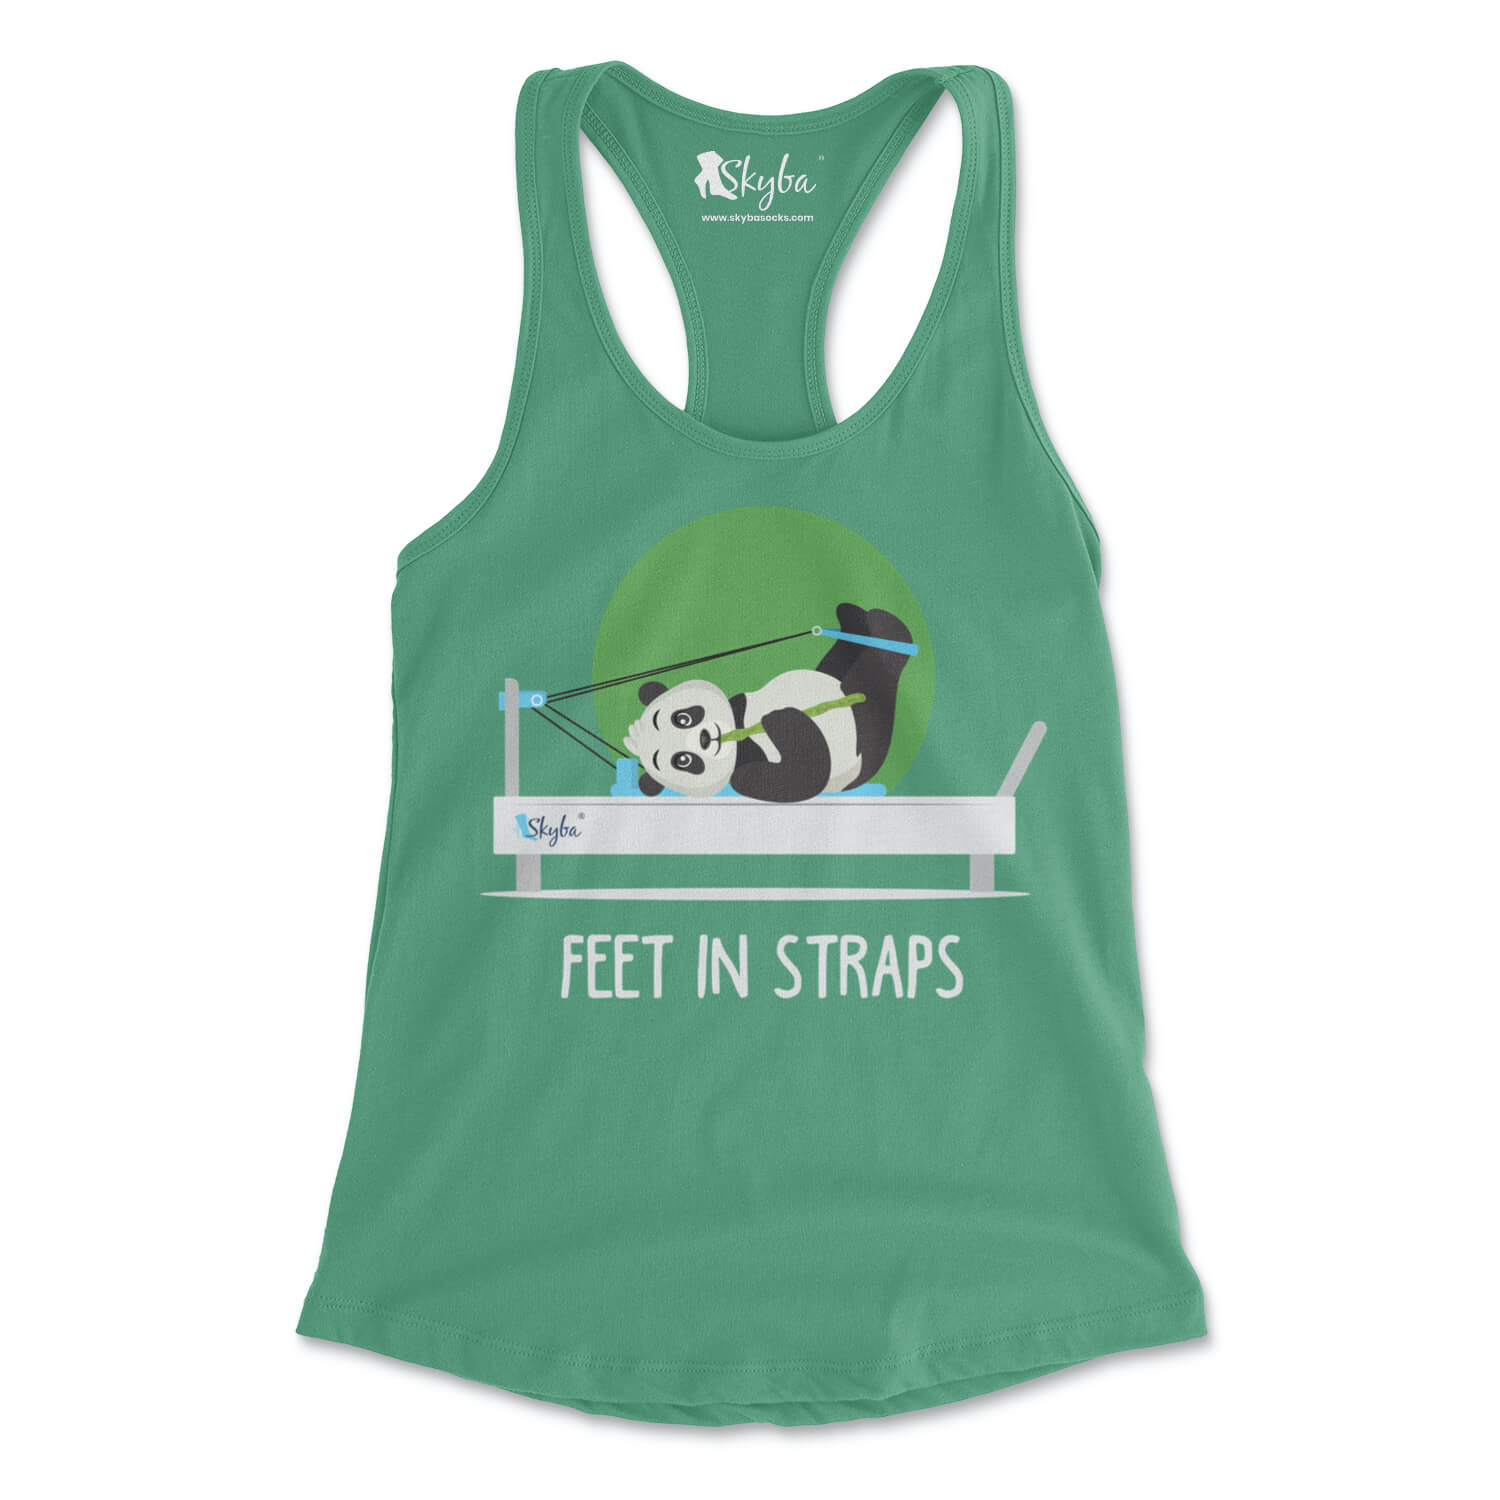 "Feet in Straps" Panda on Reformer - Women's Slim Fit Tank Skyba Tank Top